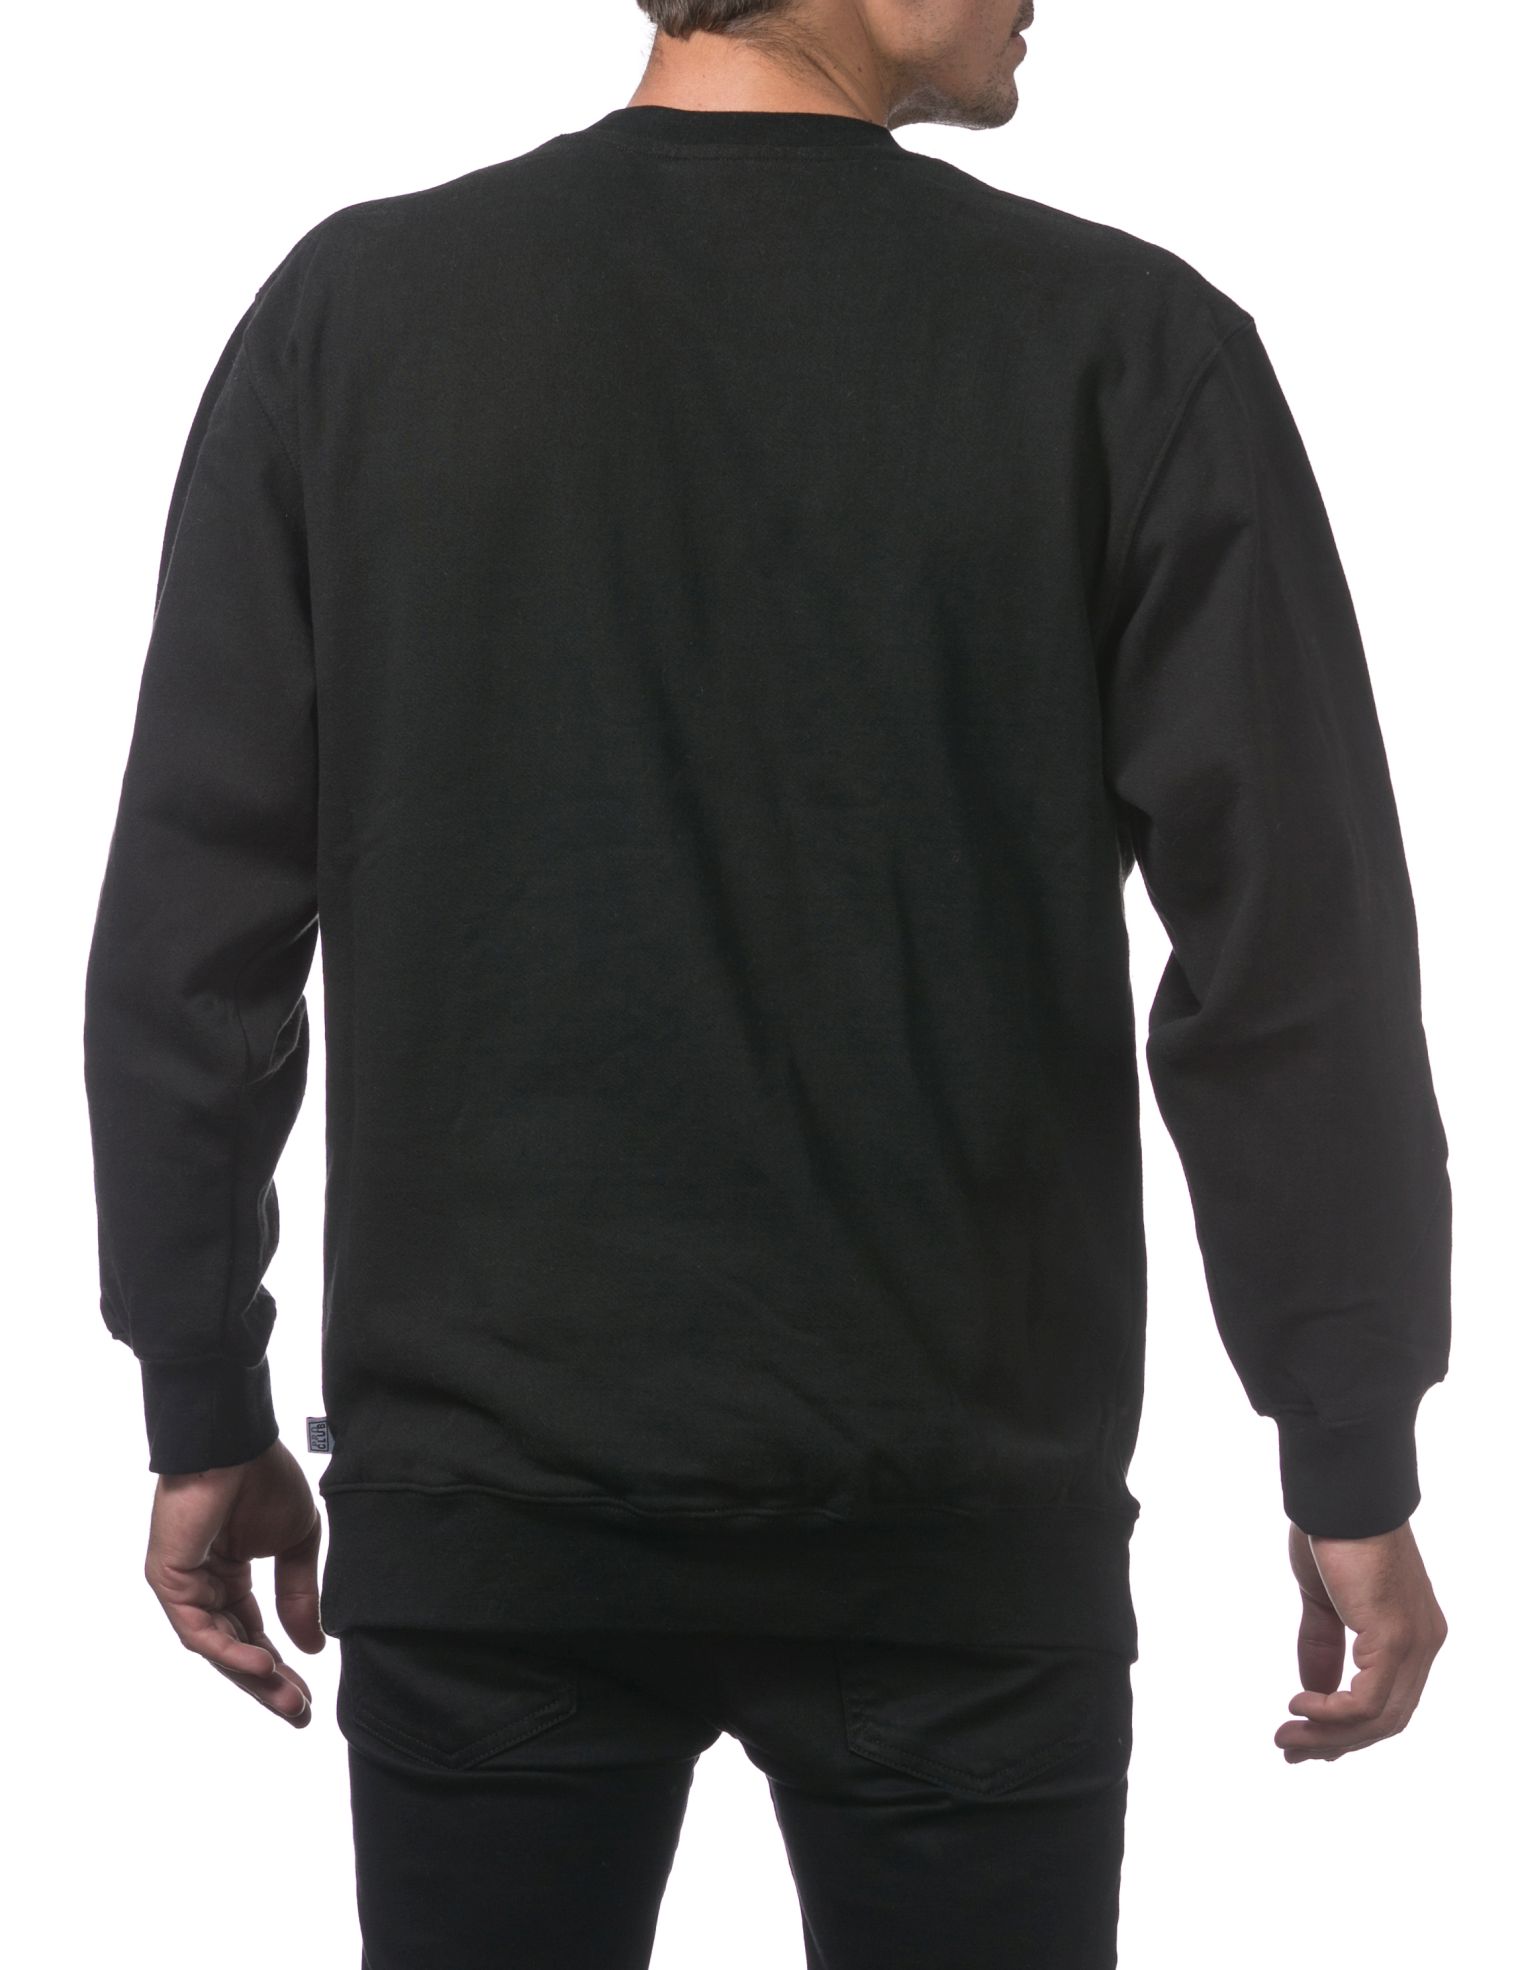 141 BLACK Heavyweight Crew Neck Fleece Pullover Sweater (13oz) - Sweaters